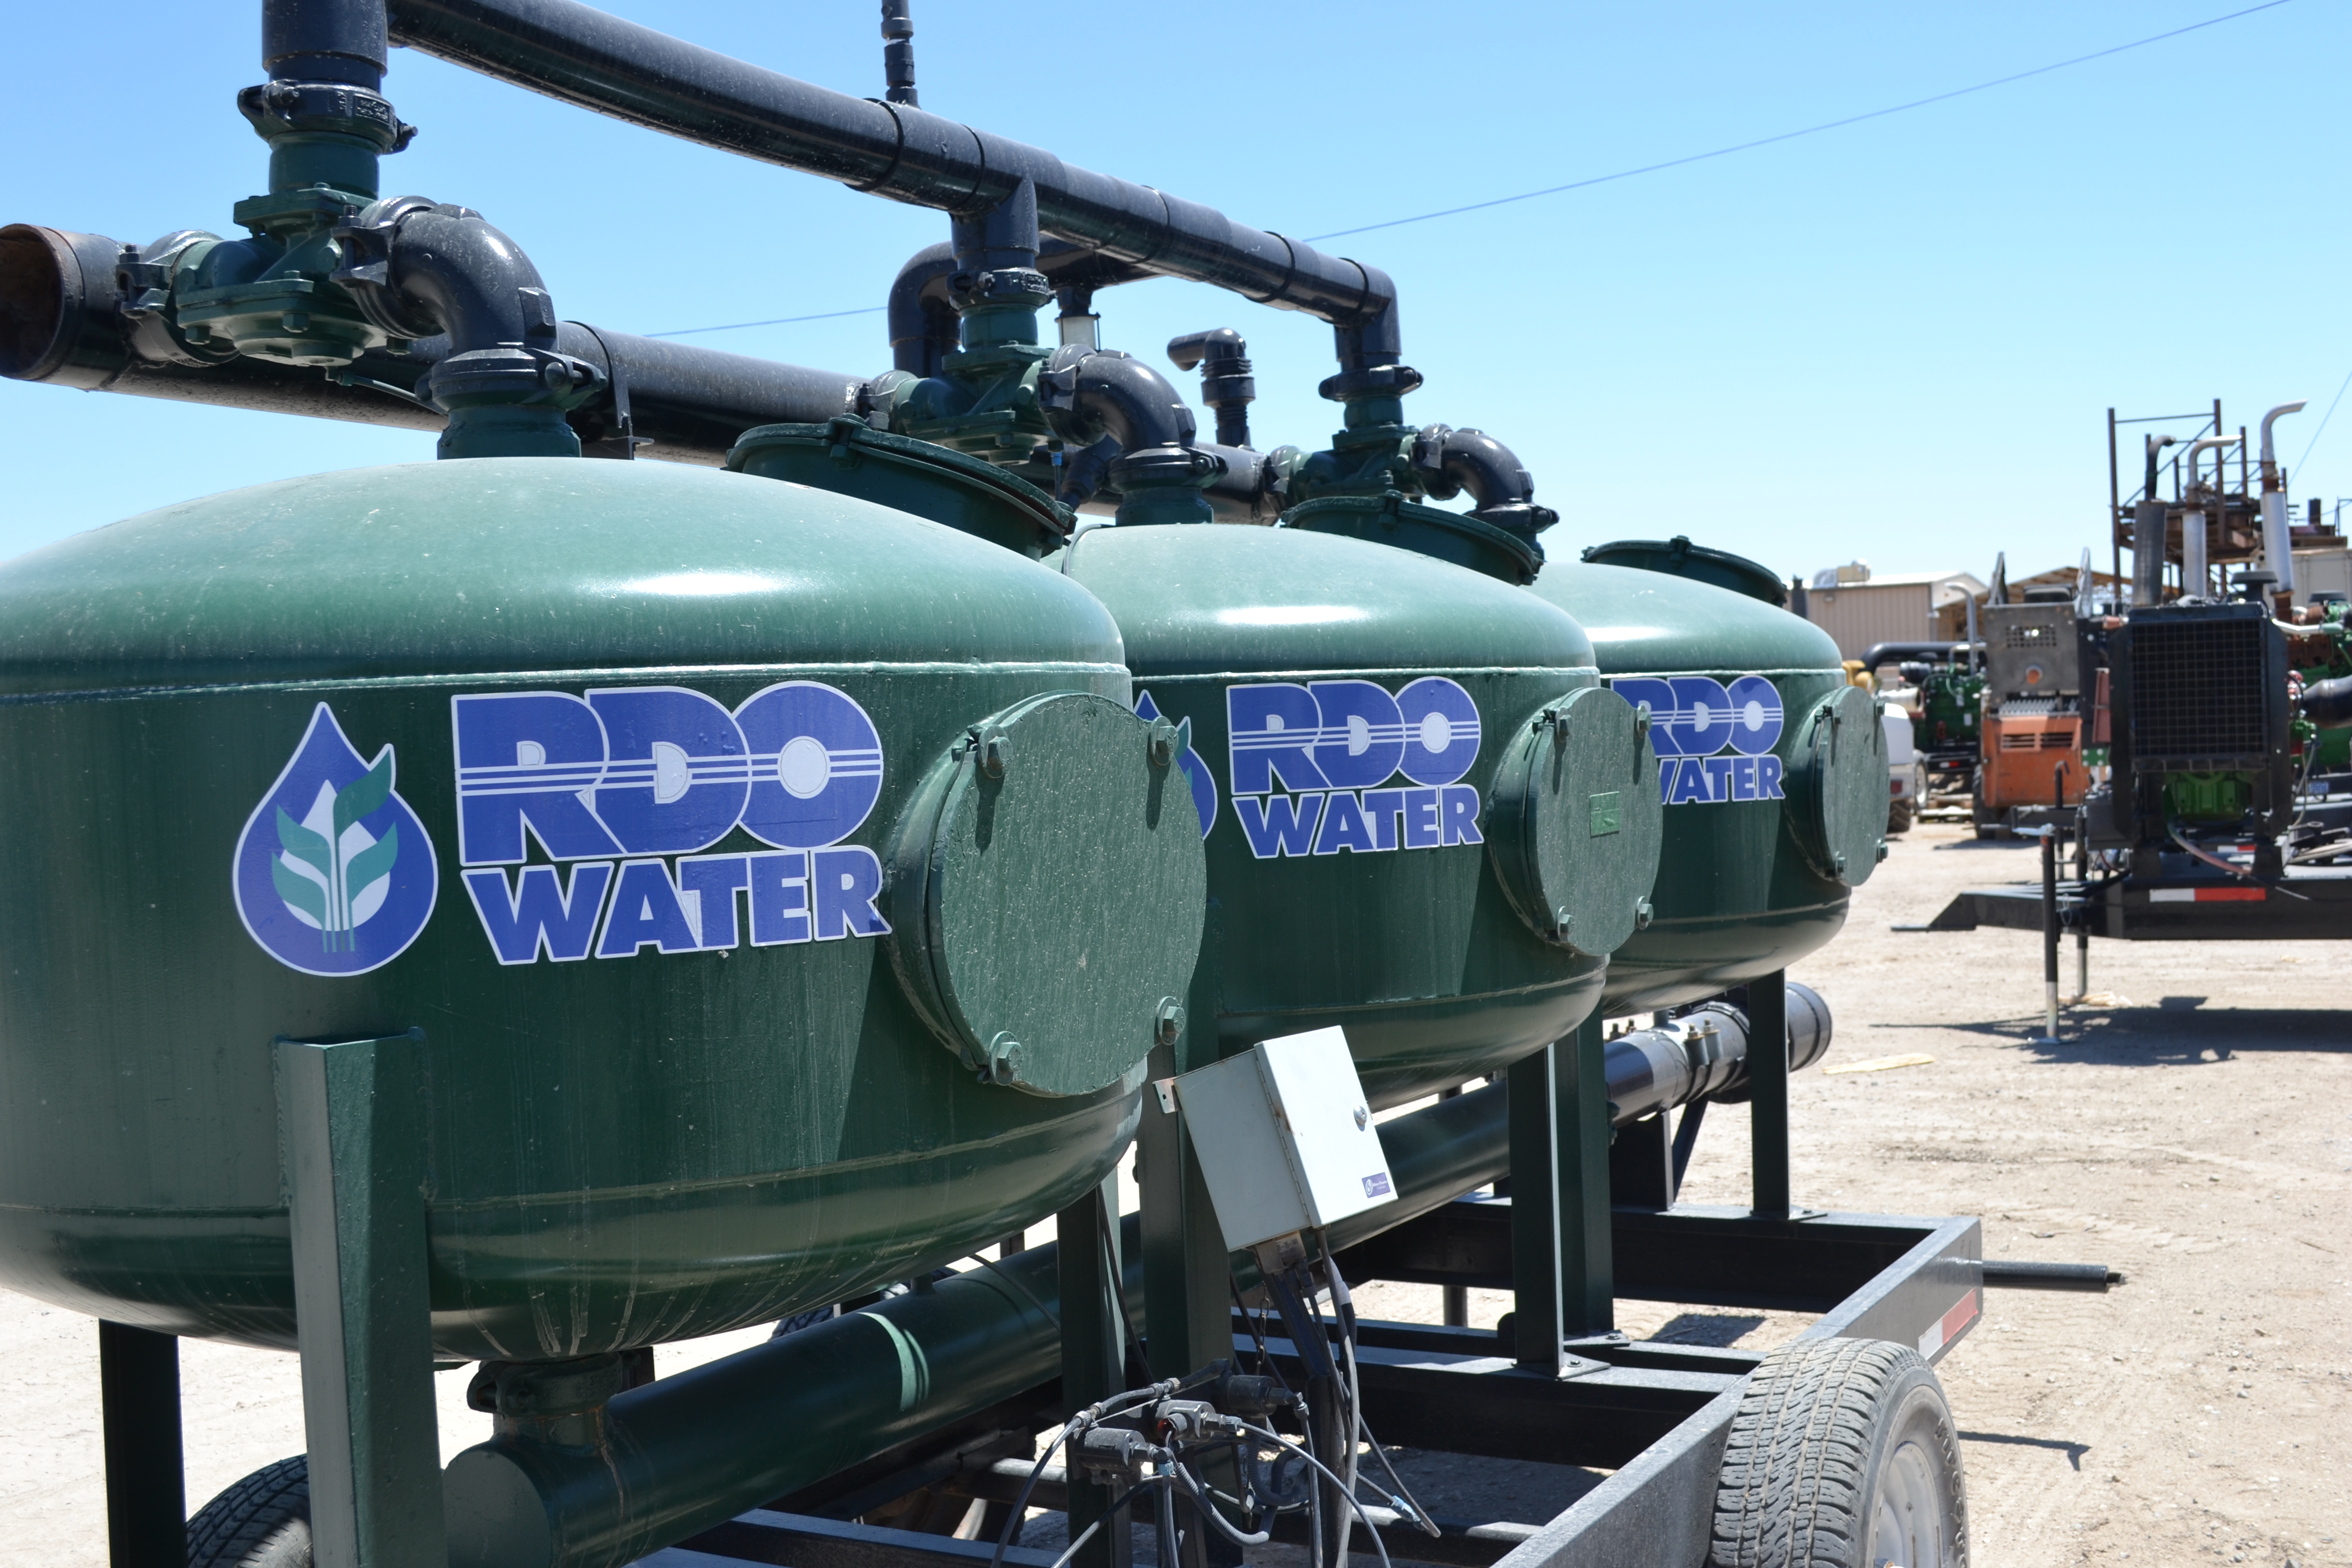 Water Equipment at RDO Water in Brawley, CA